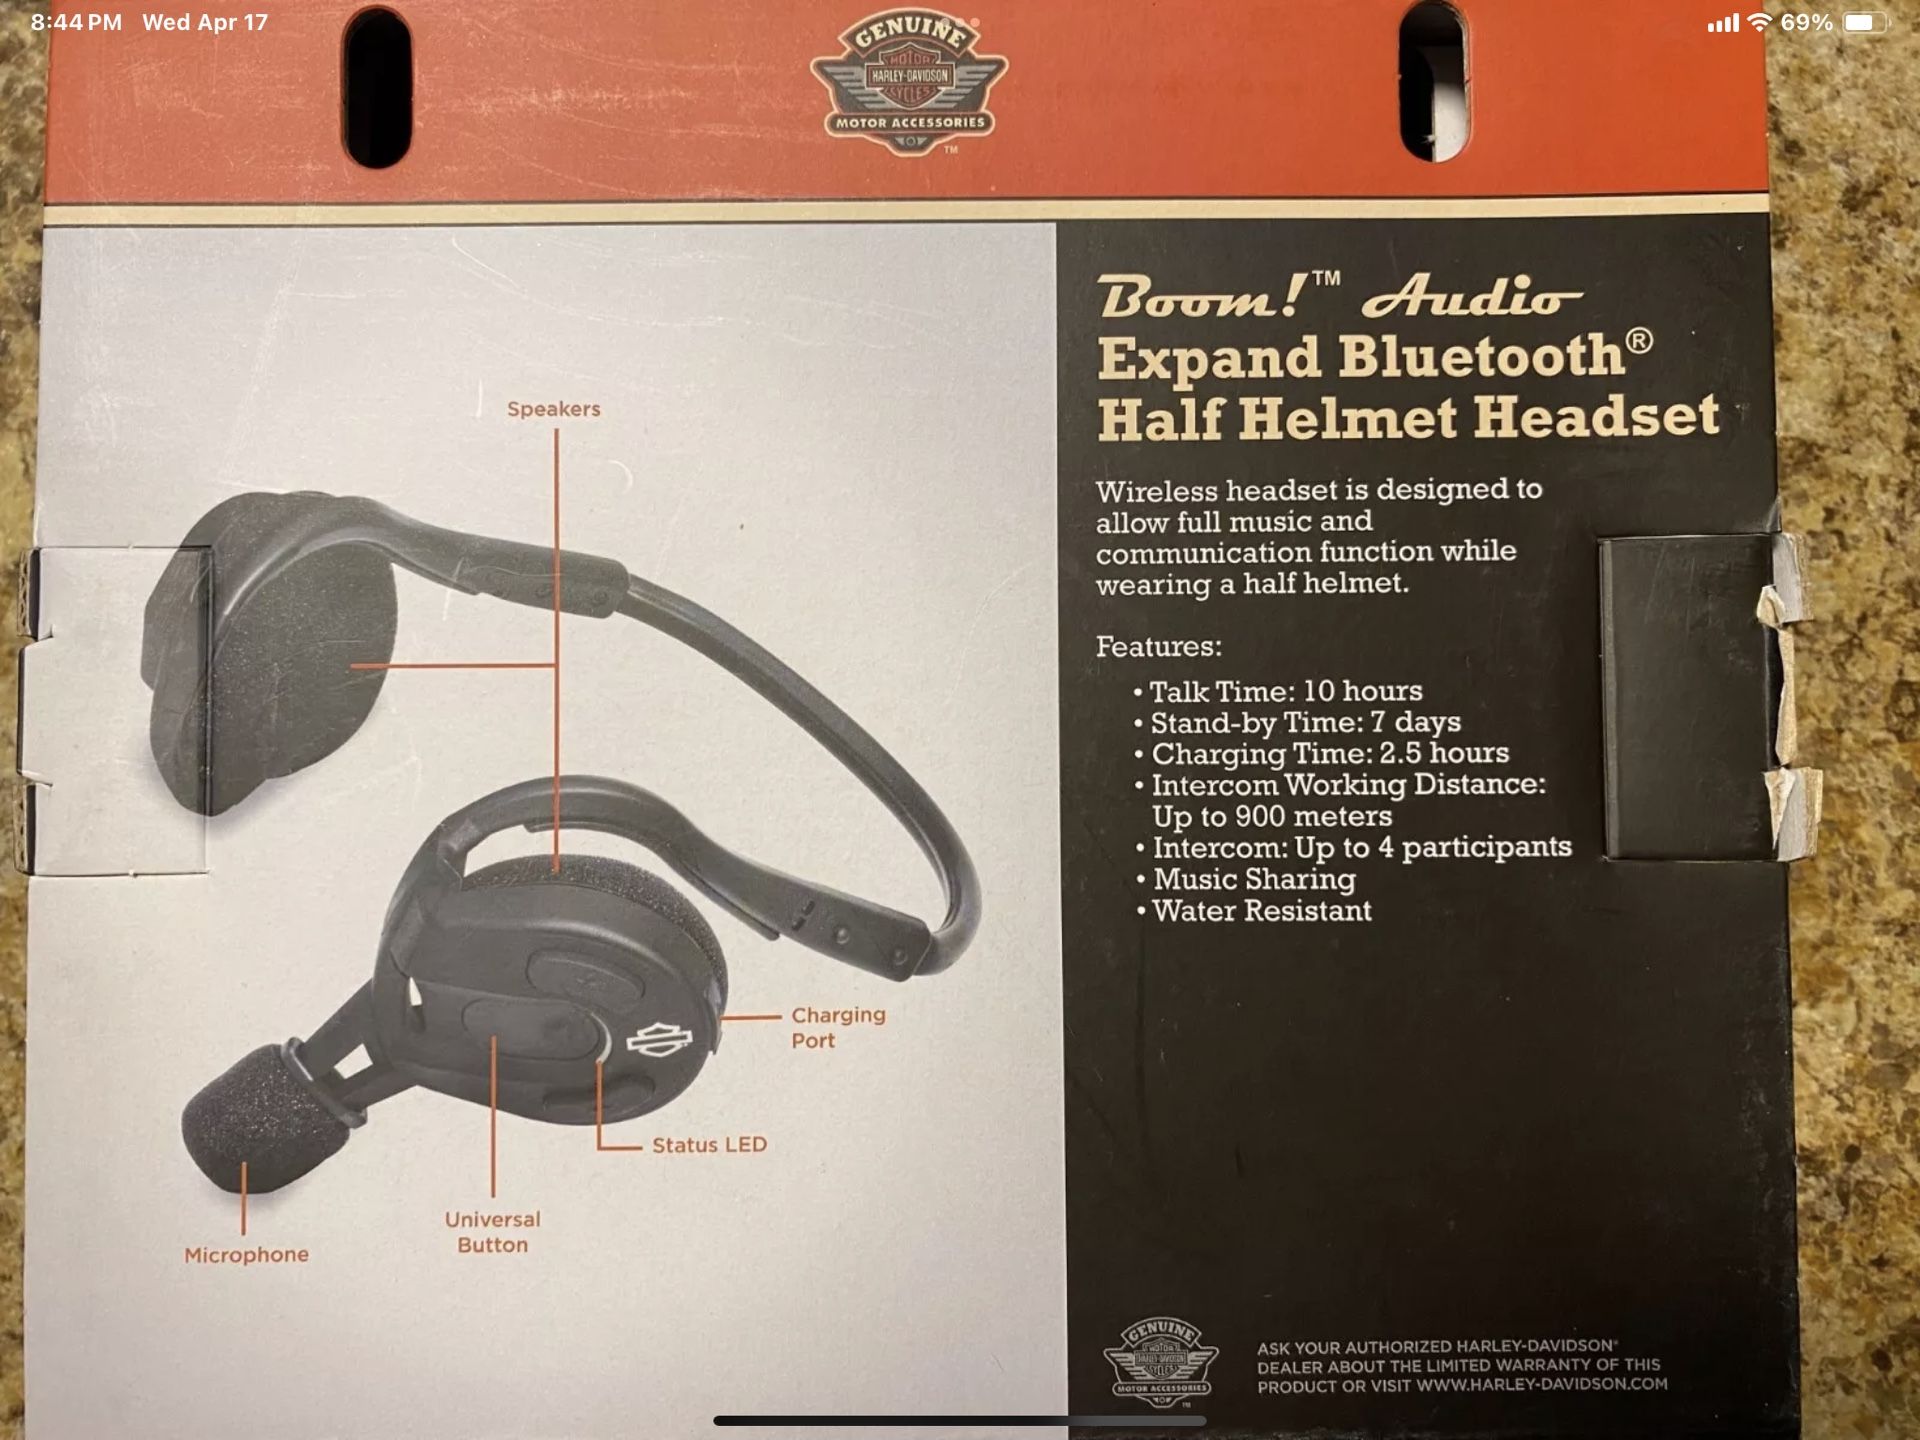 Boom Audio Expand Bluetooth Half Helmet Headset and SENA headset